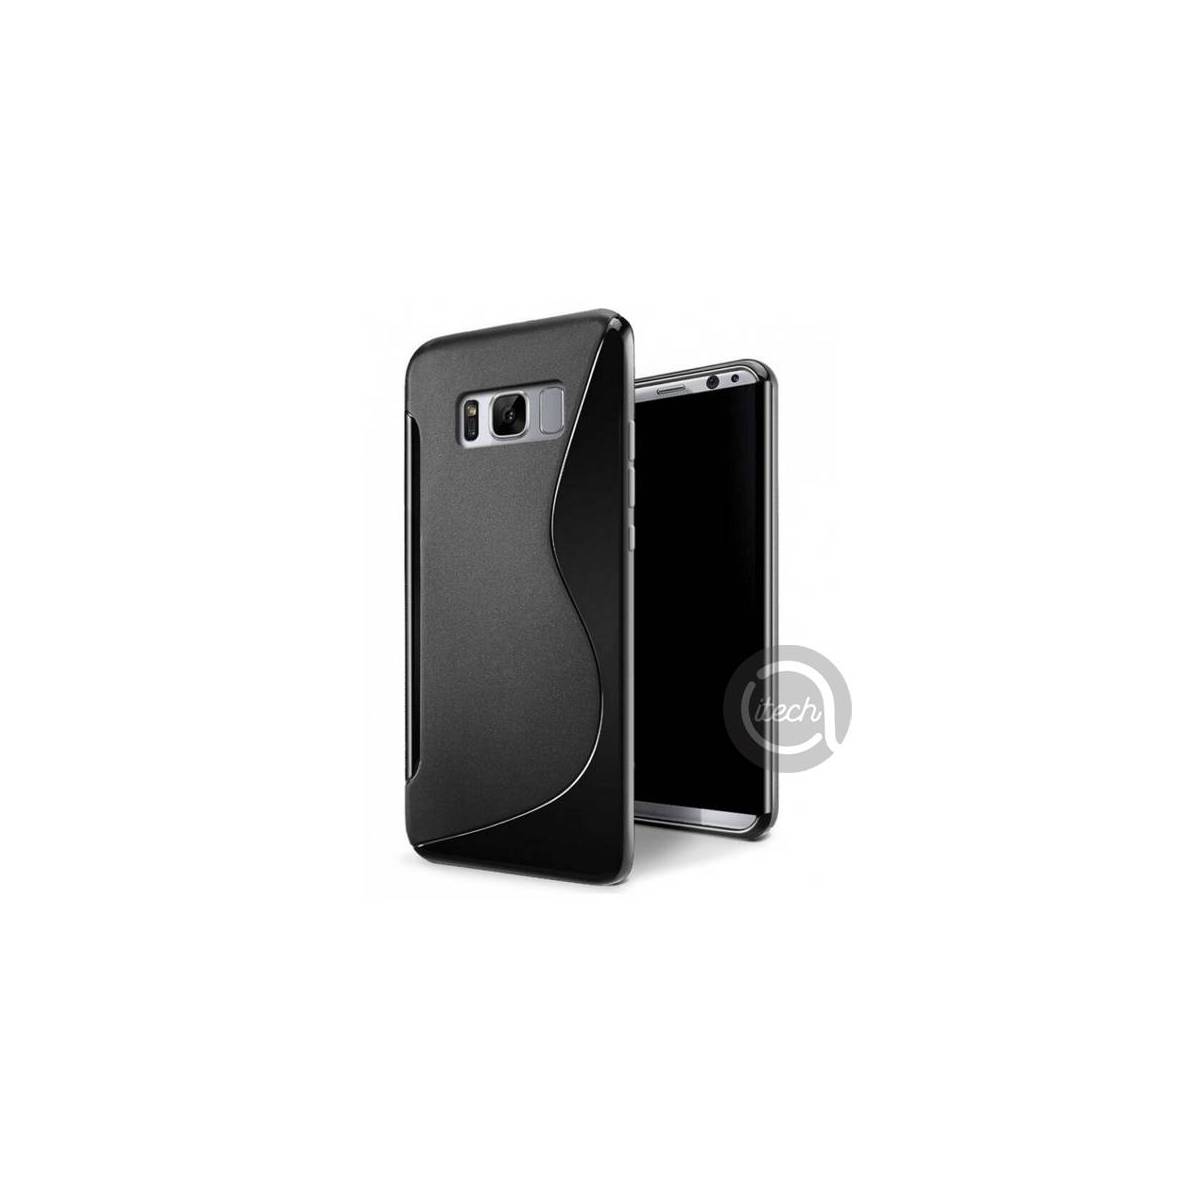 Coque Silicone S Noire Galaxy S9